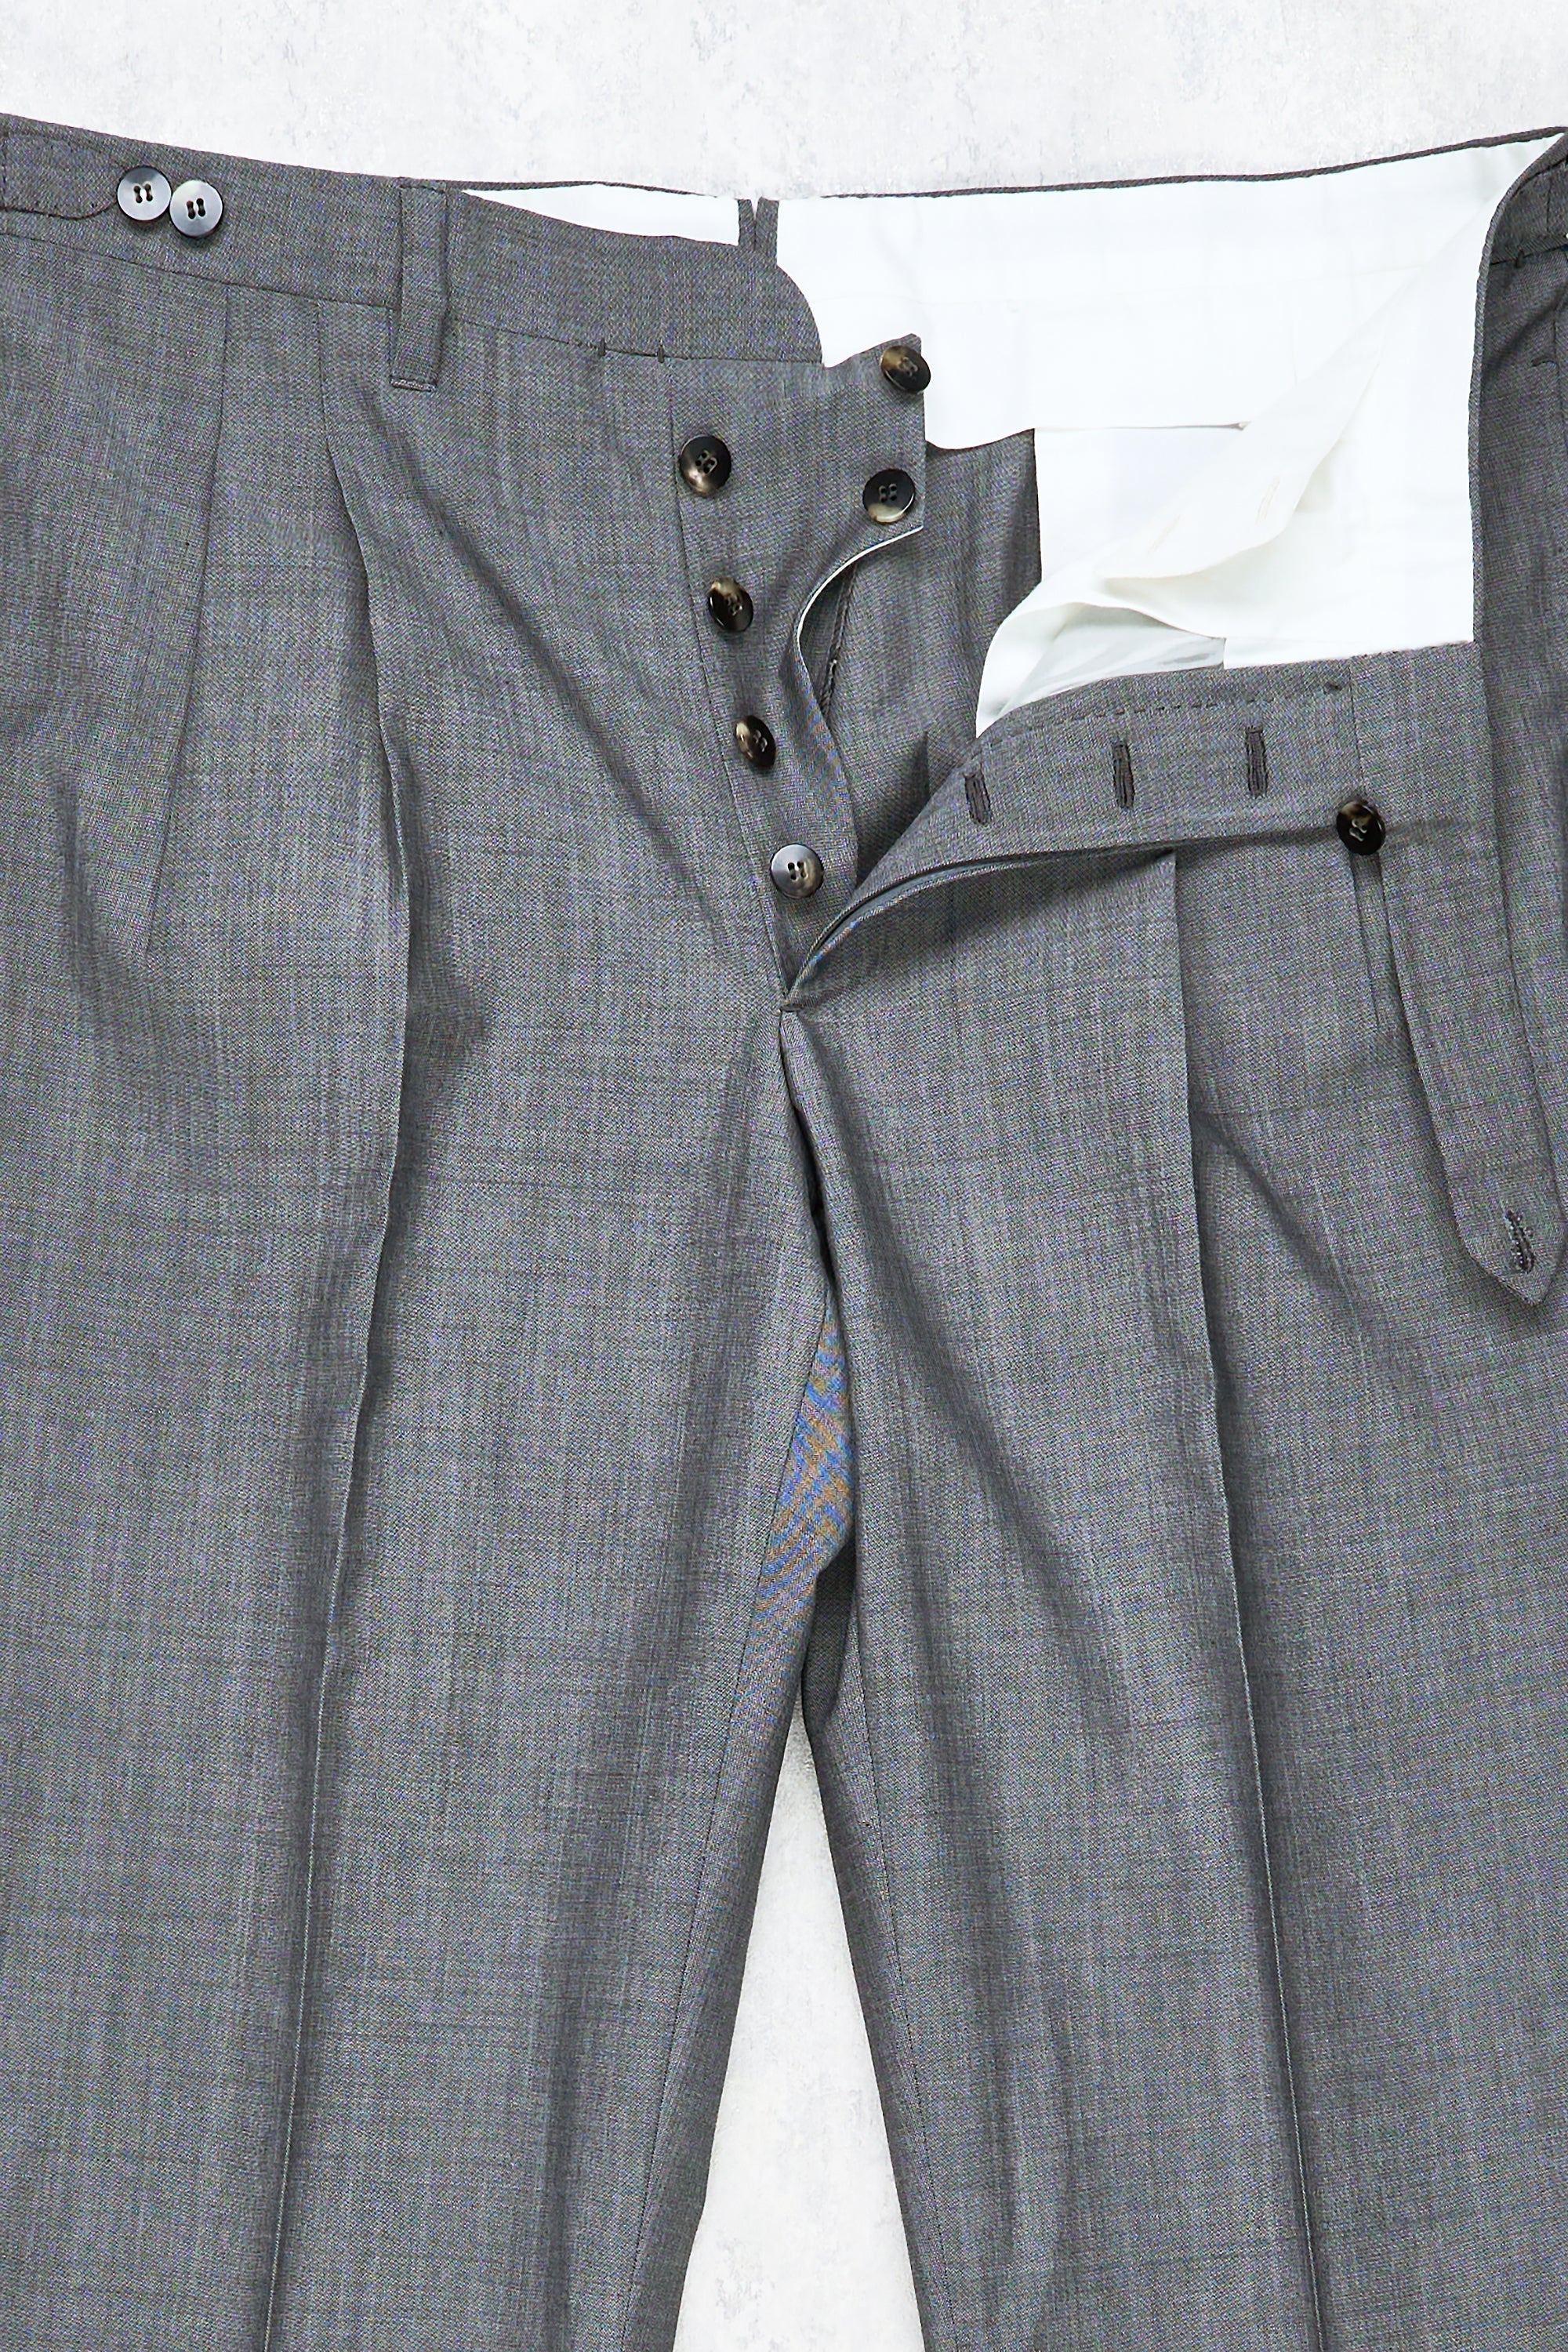 Cesare Attolini Grey Wool/Mohair Suit